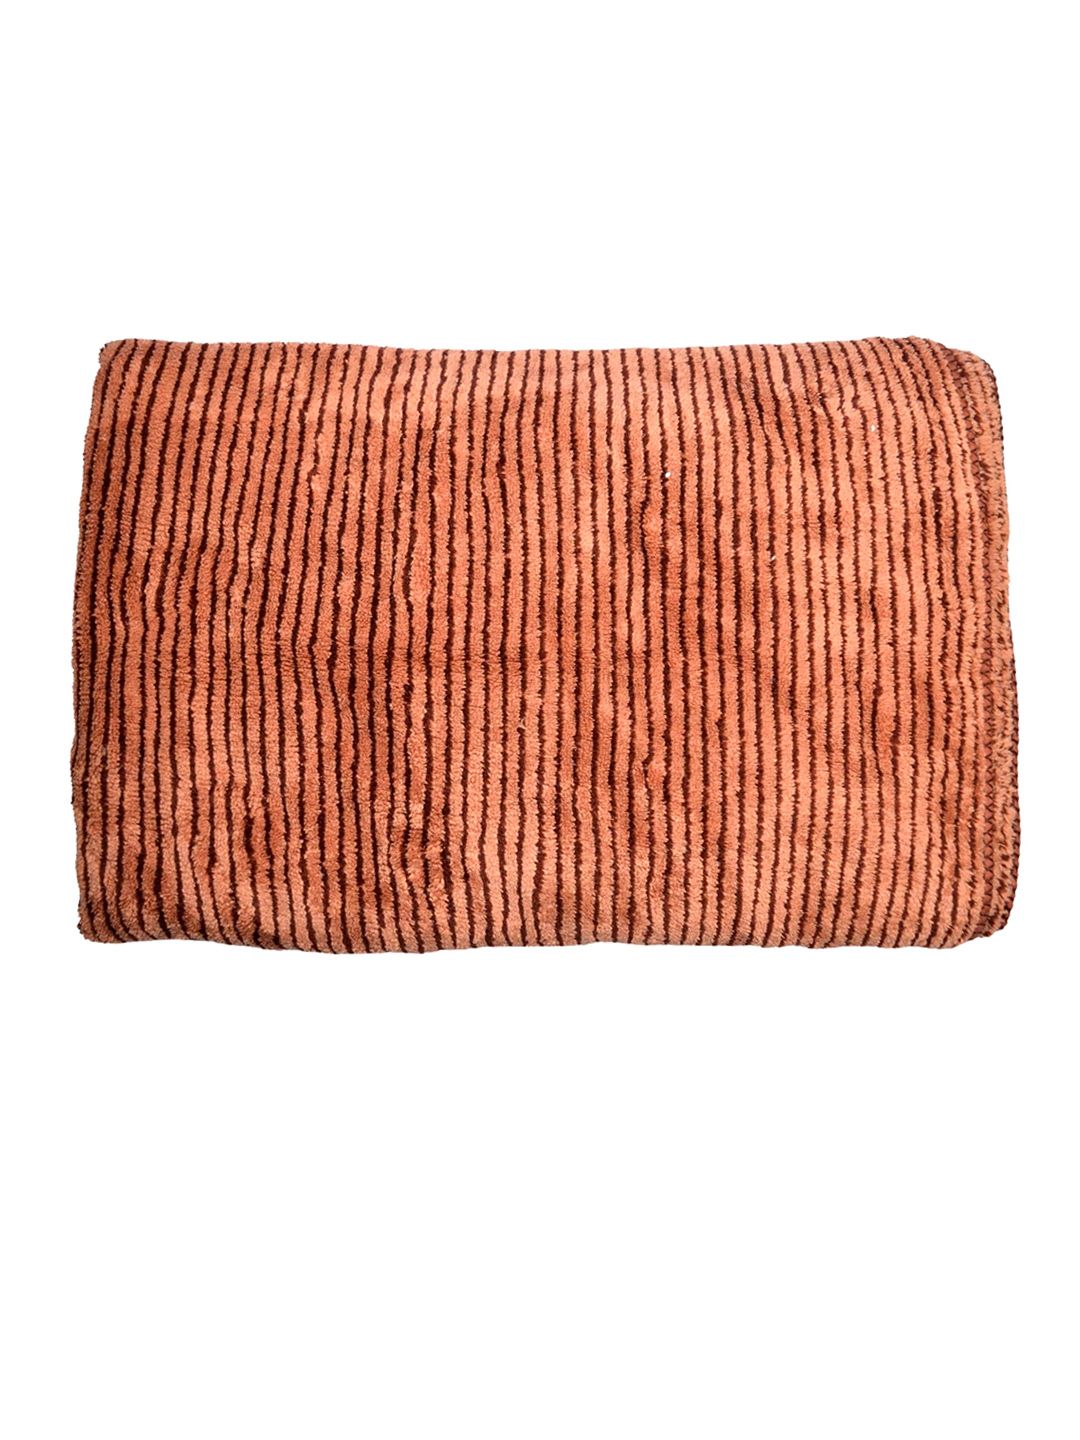 Tranquil square Orange Striped 650 GSM Cotton Bath Towel Price in India